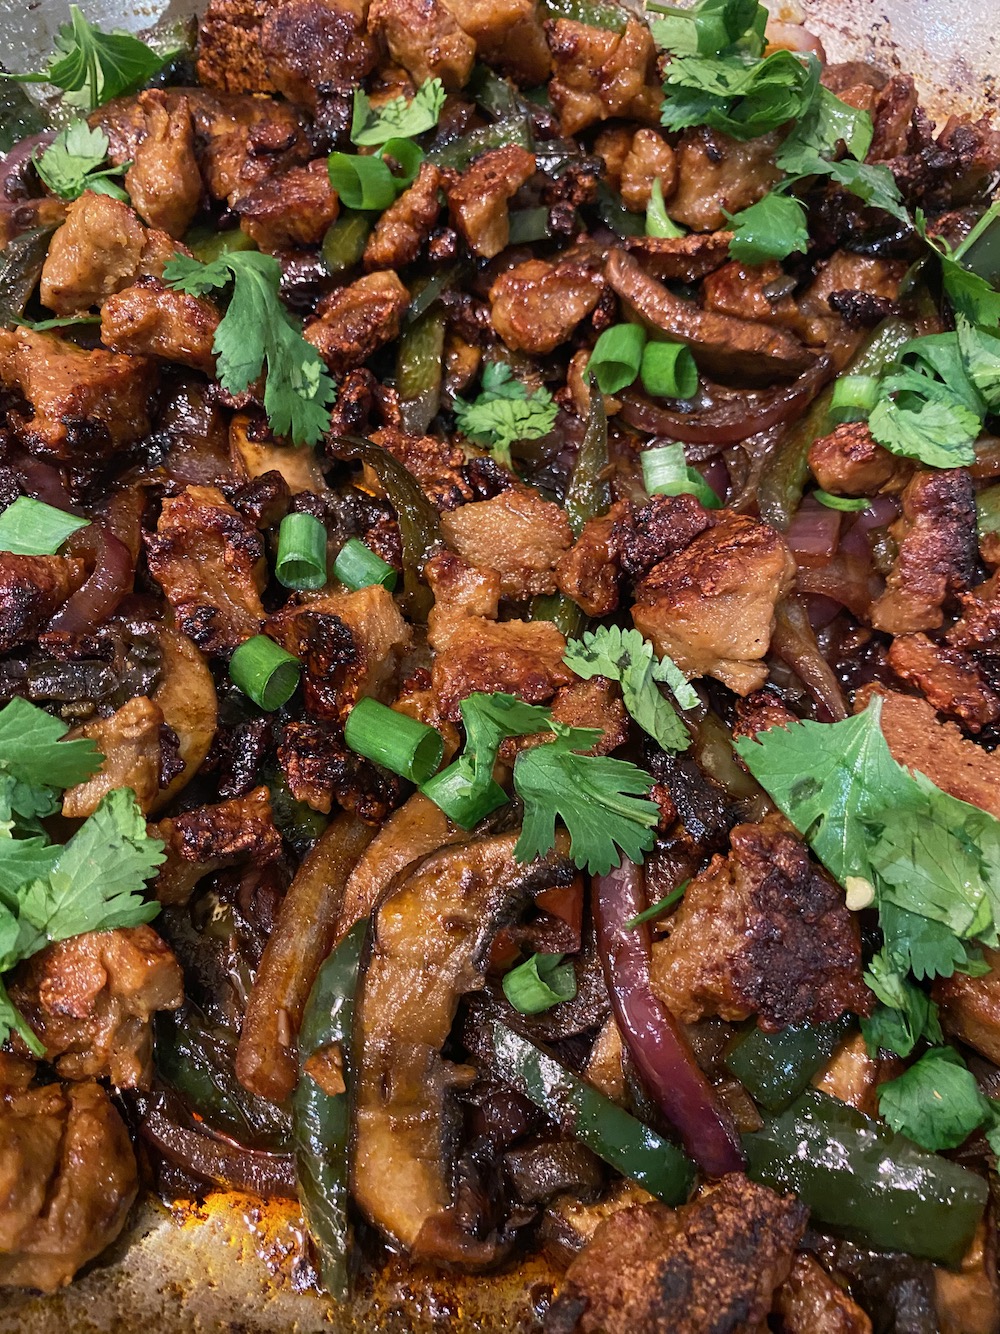 Now your vegan portobello mushroom fajita tacos are ready!